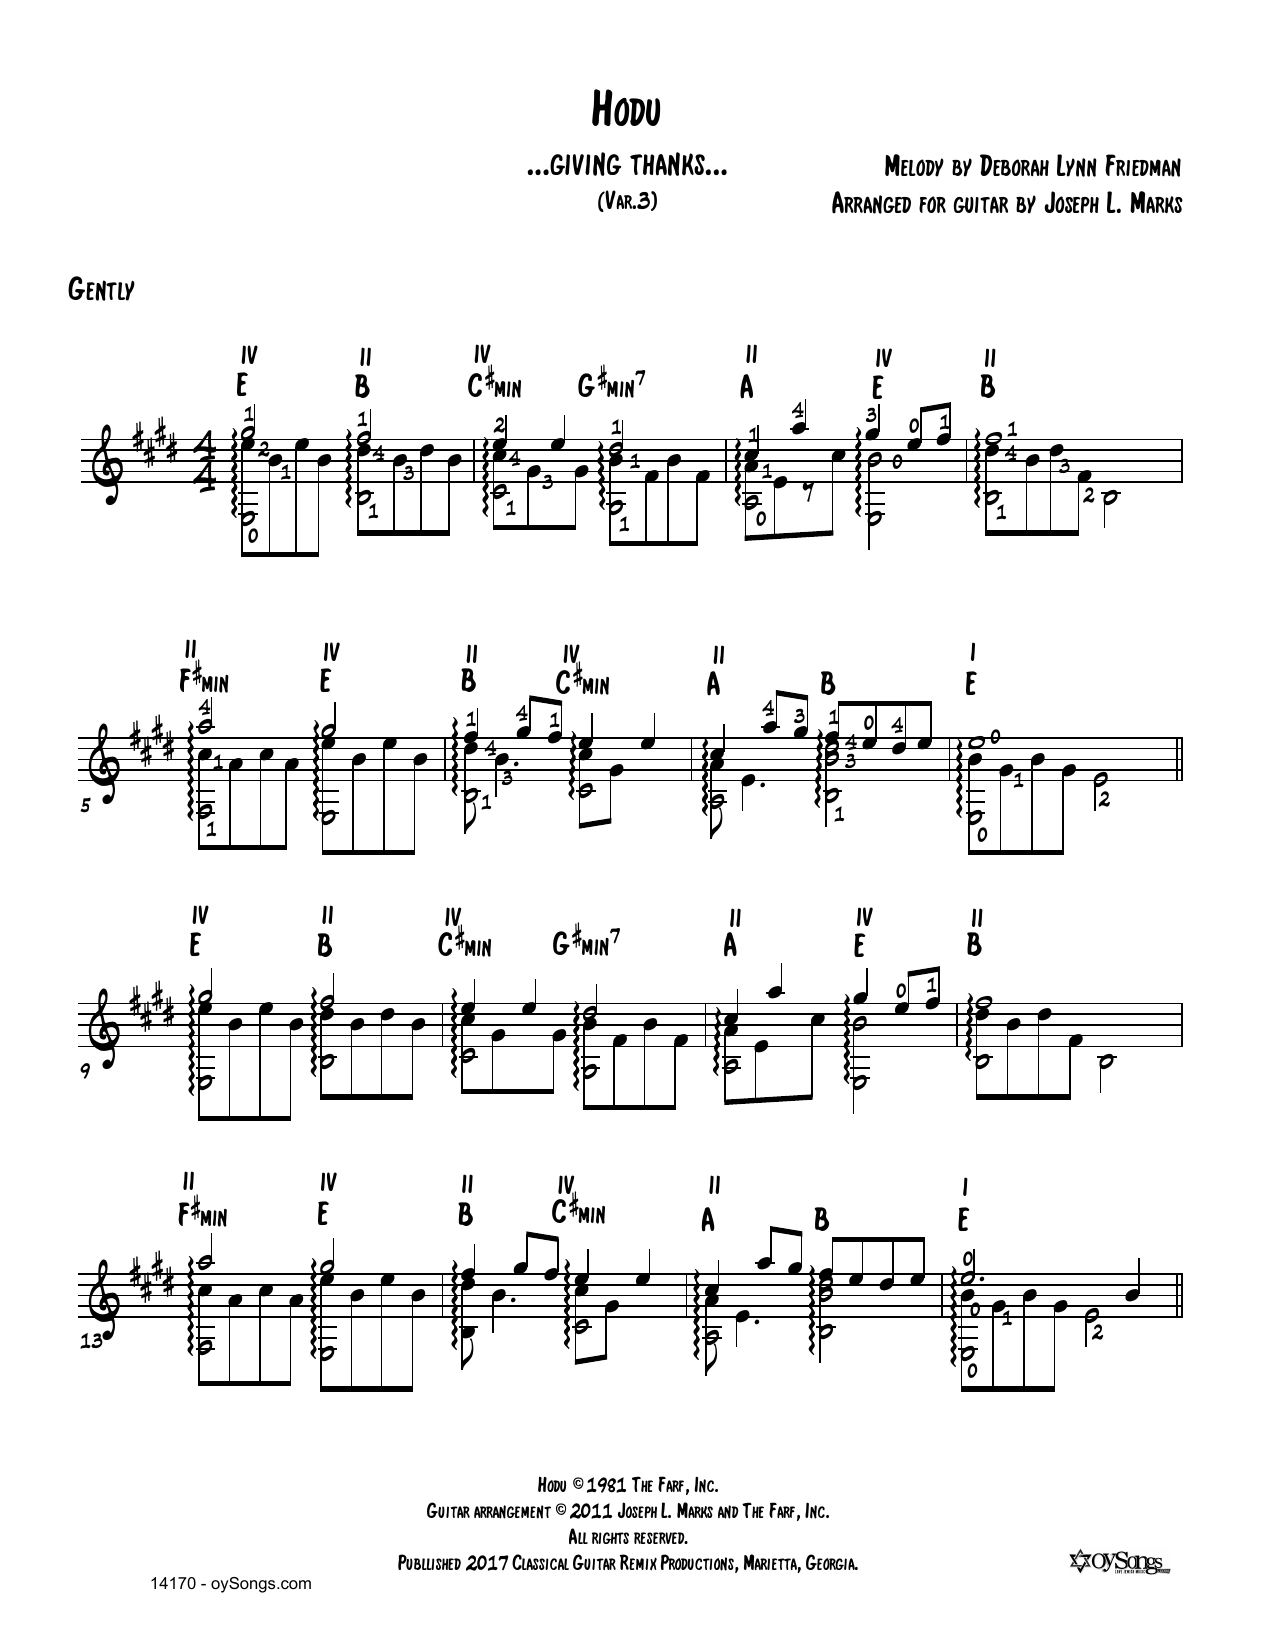 Download Debbie Friedman Hodu Var 3 (arr. Joe Marks) Sheet Music and learn how to play Solo Guitar PDF digital score in minutes